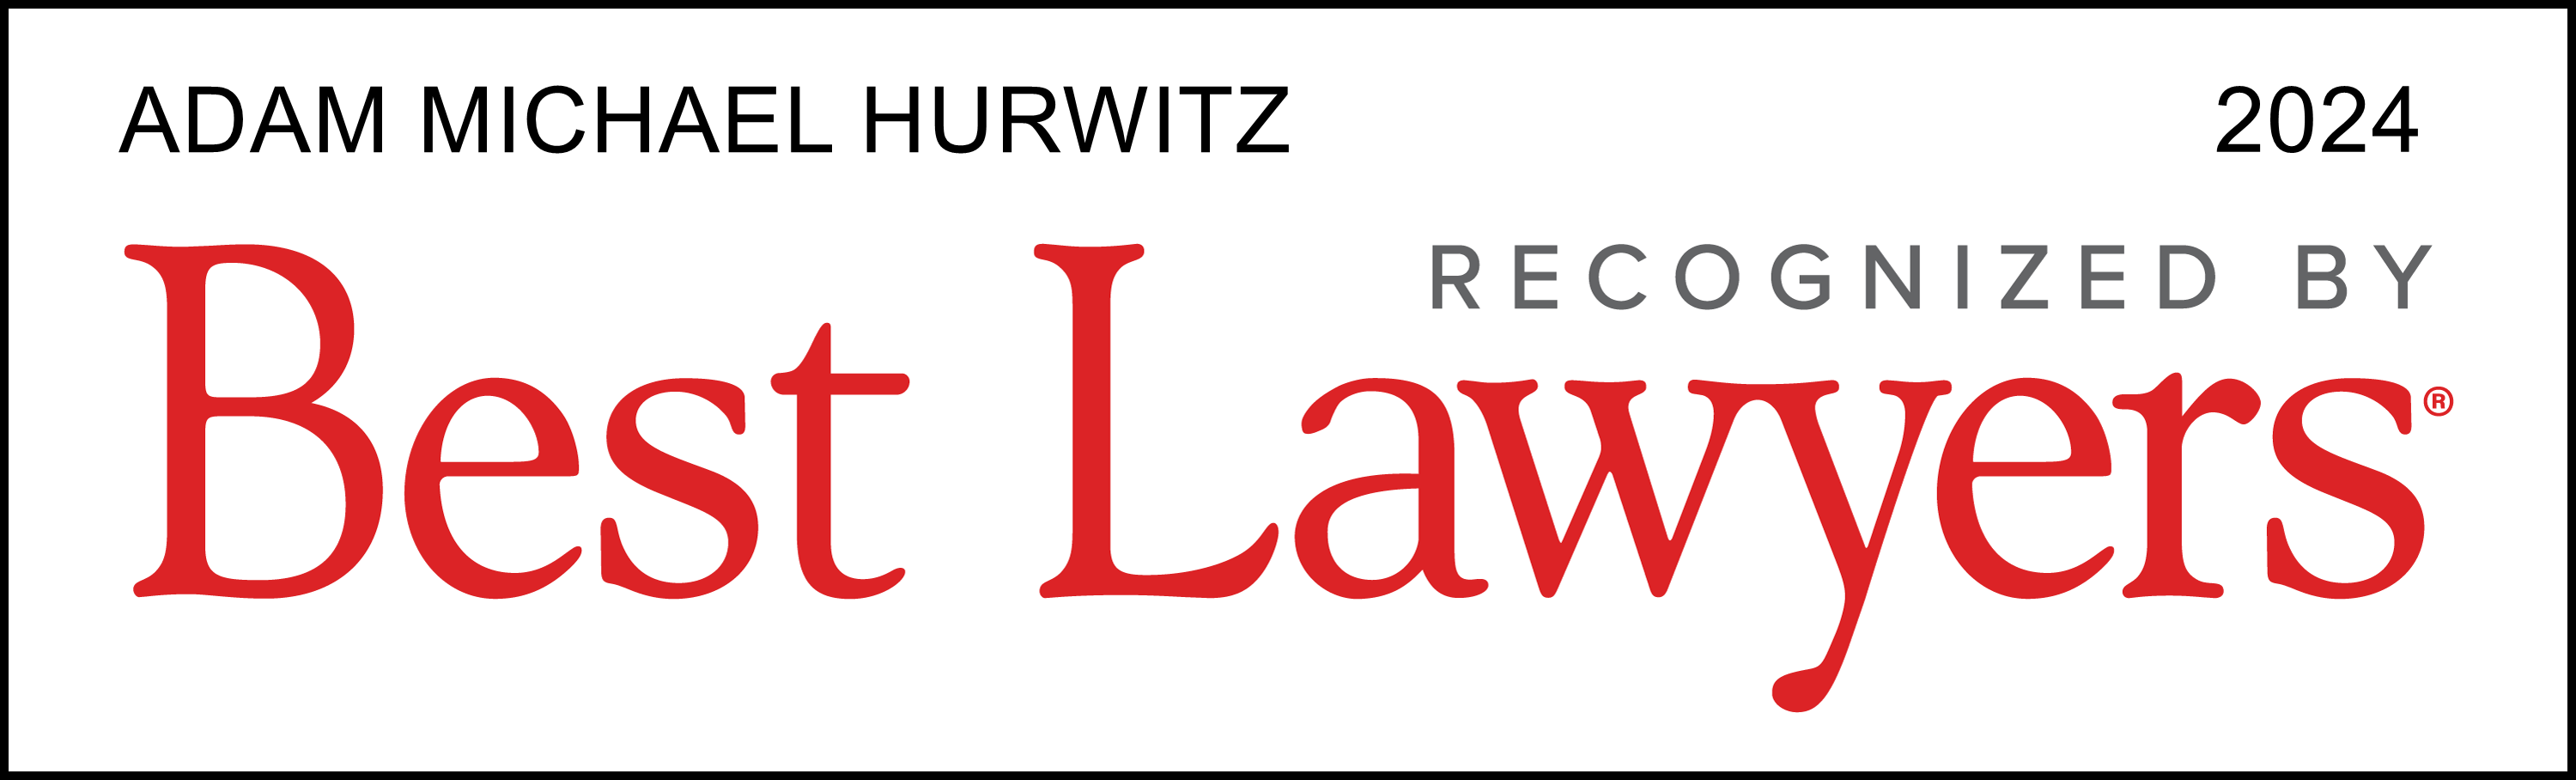 Adam Michael Hurwitz recognized by Best Lawyers 2024